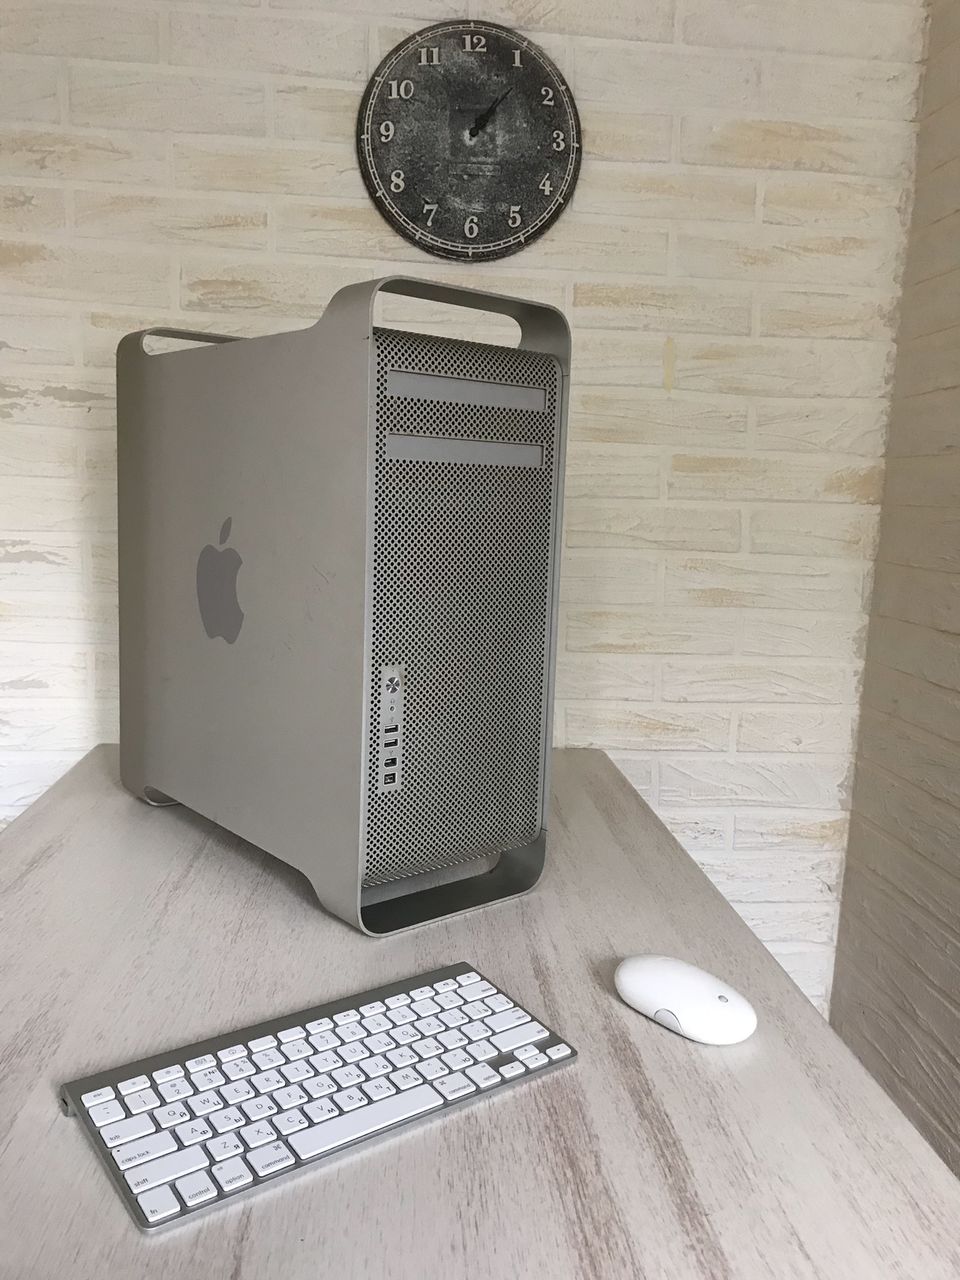 8 core mac pro original